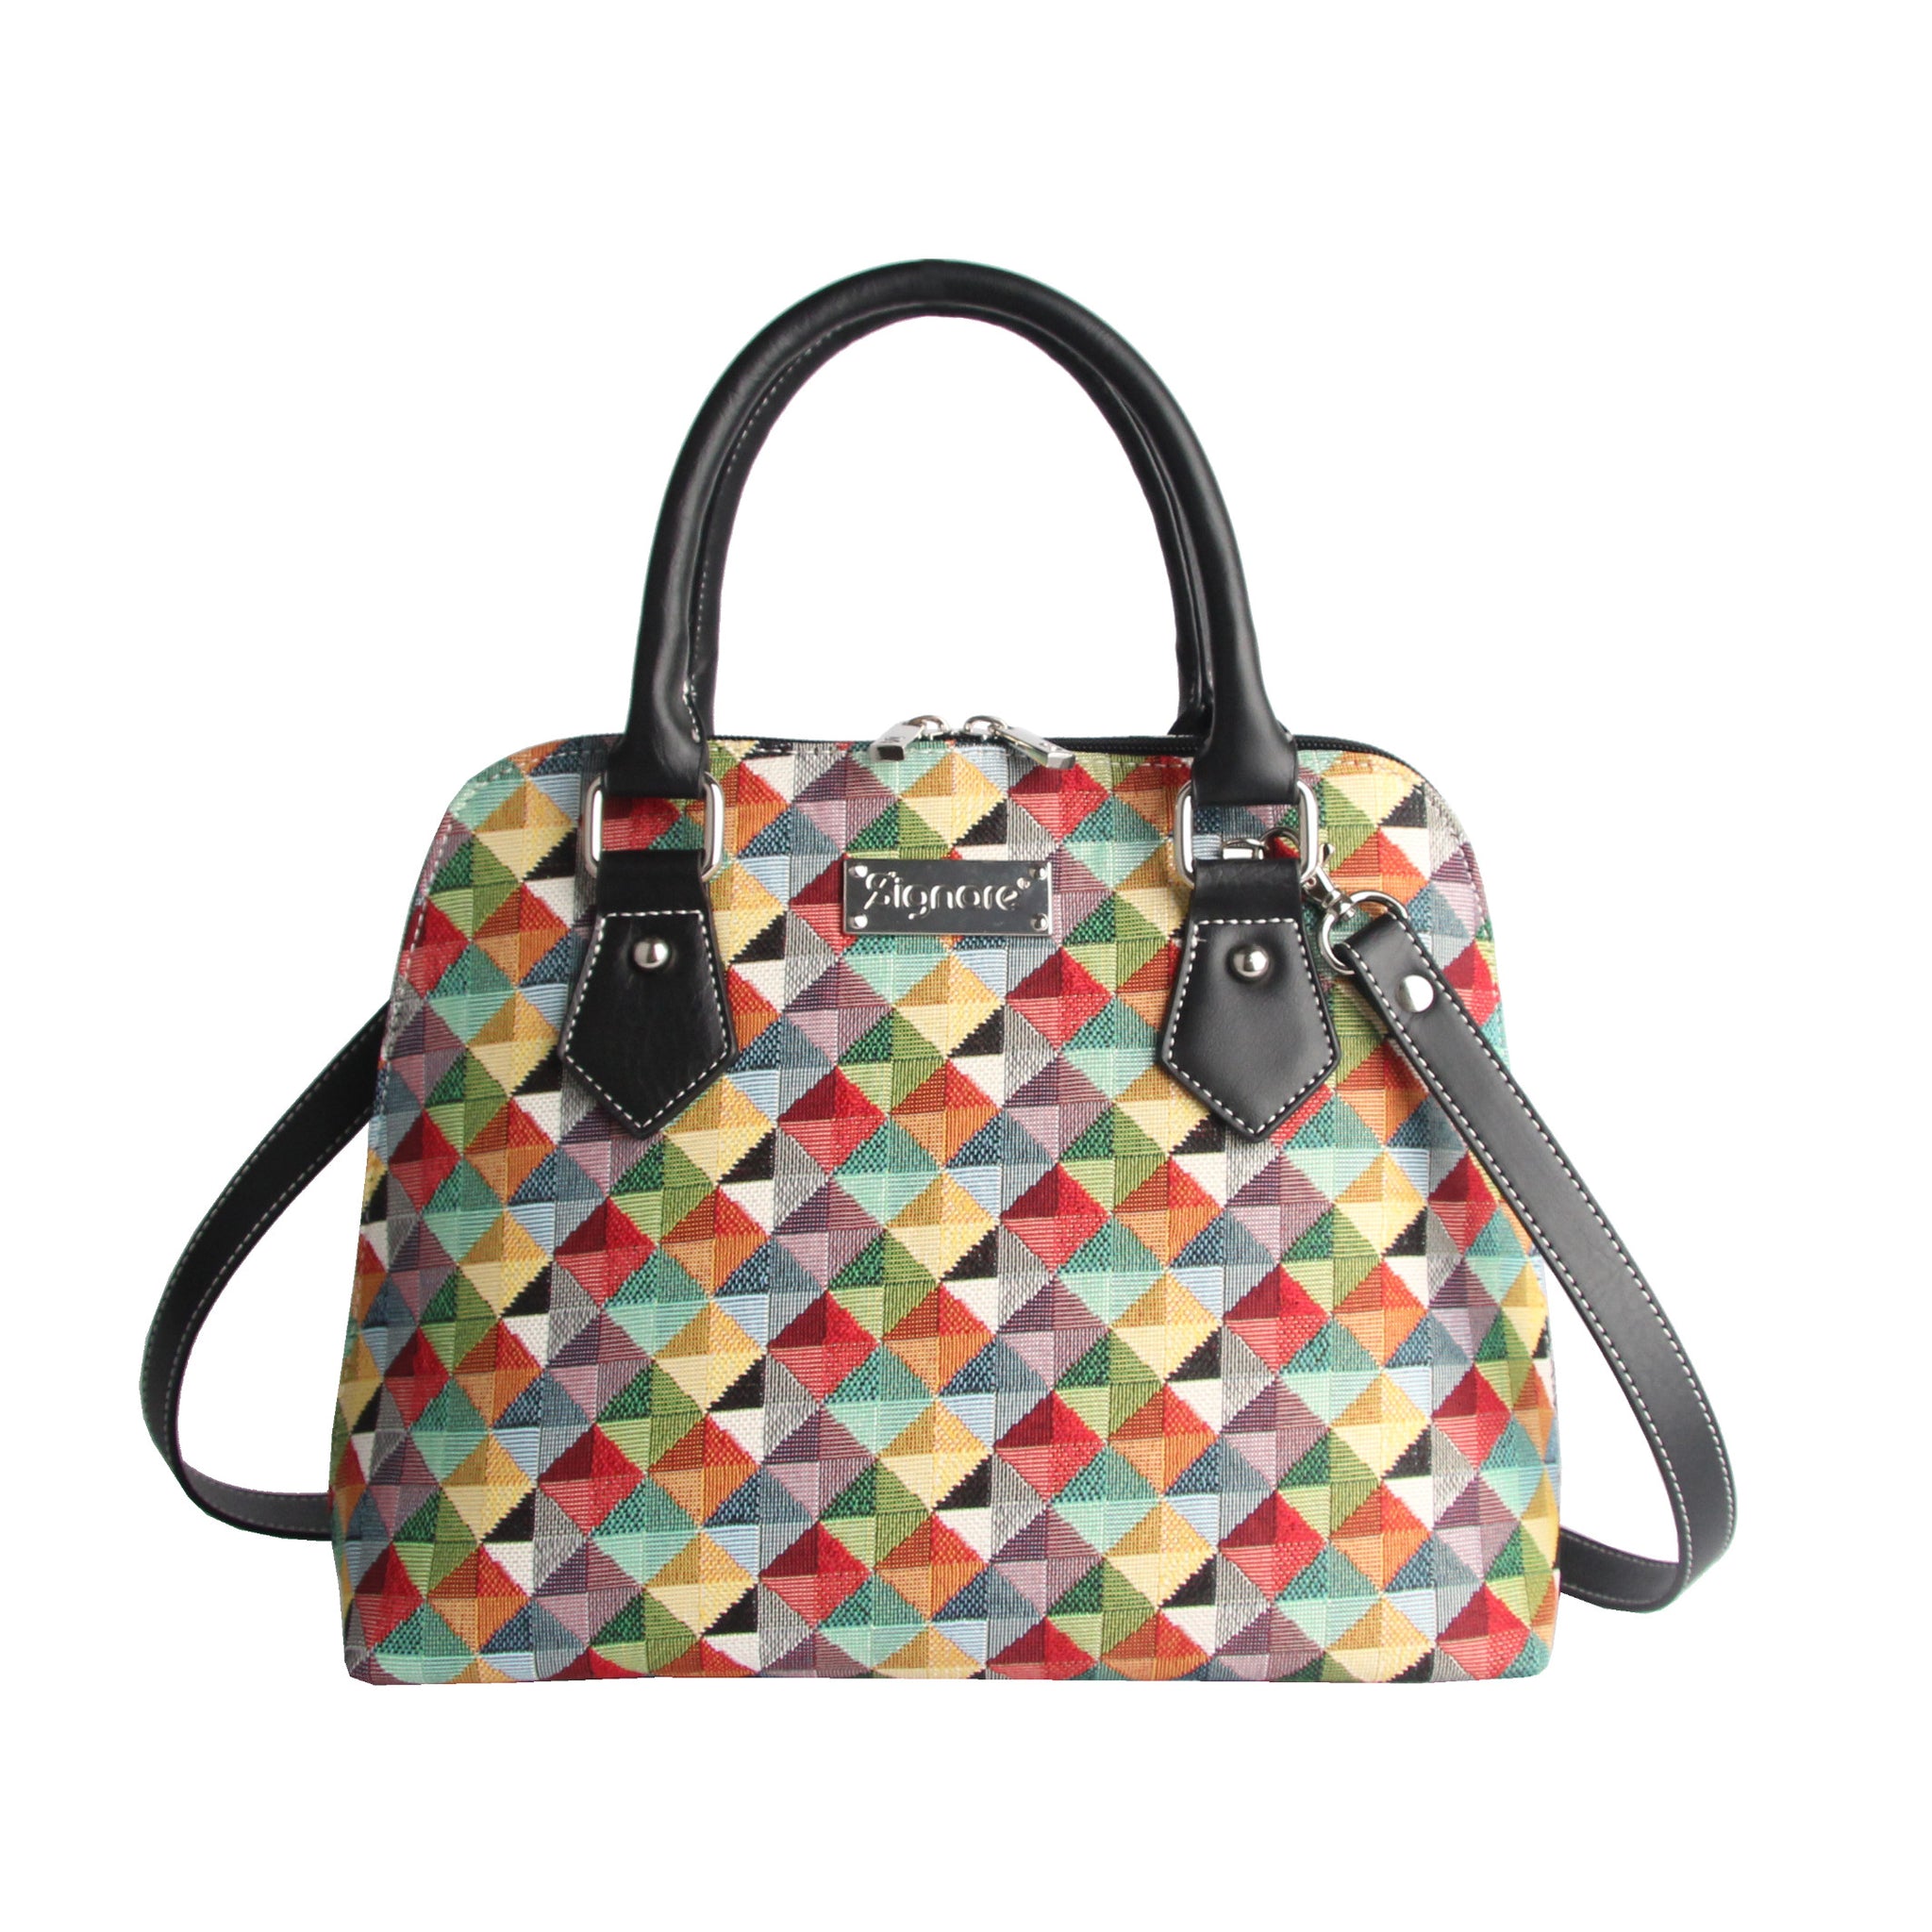 CONV-MTRI | Multicolor Triangle Convertible Top Handle Purse Handbag - www.signareusa.com